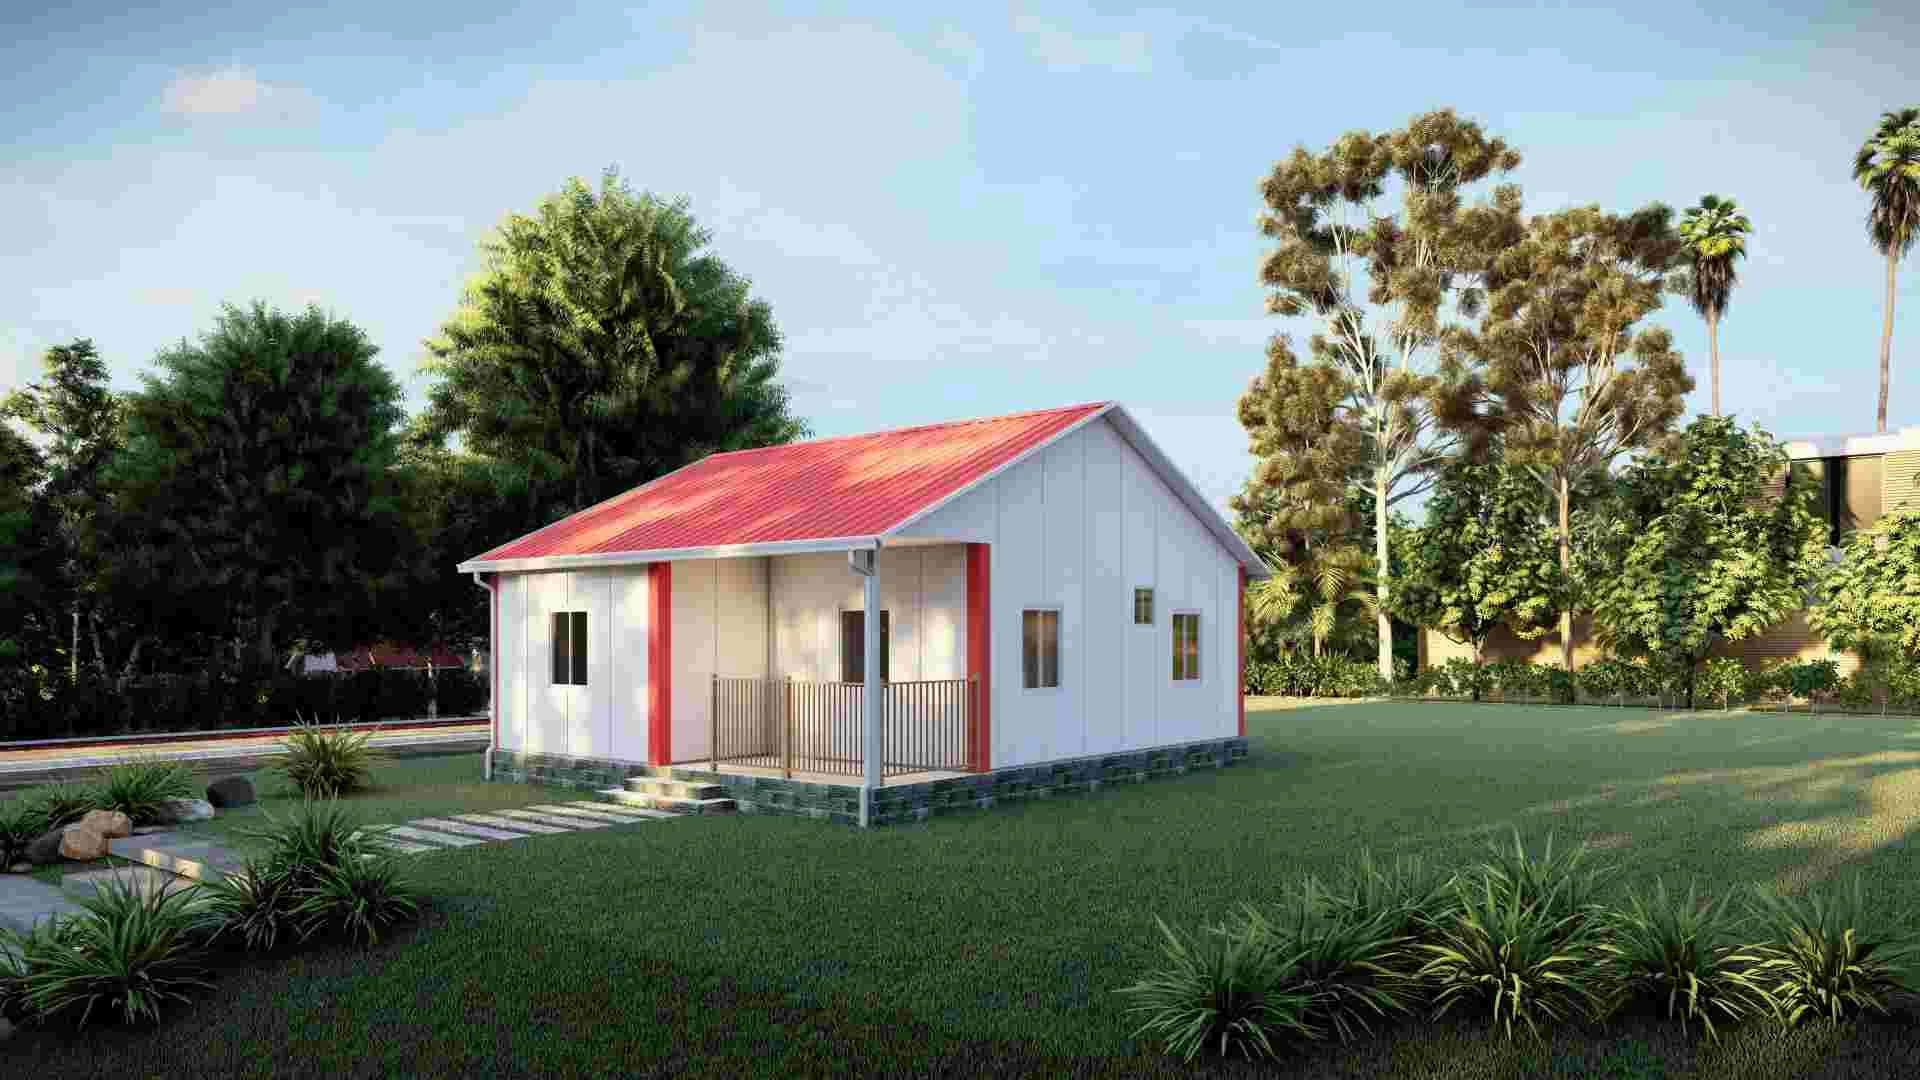 2B07-A 2019 Prefab Tiny House Prefabricated 2 Bedroom Home In Uruguay